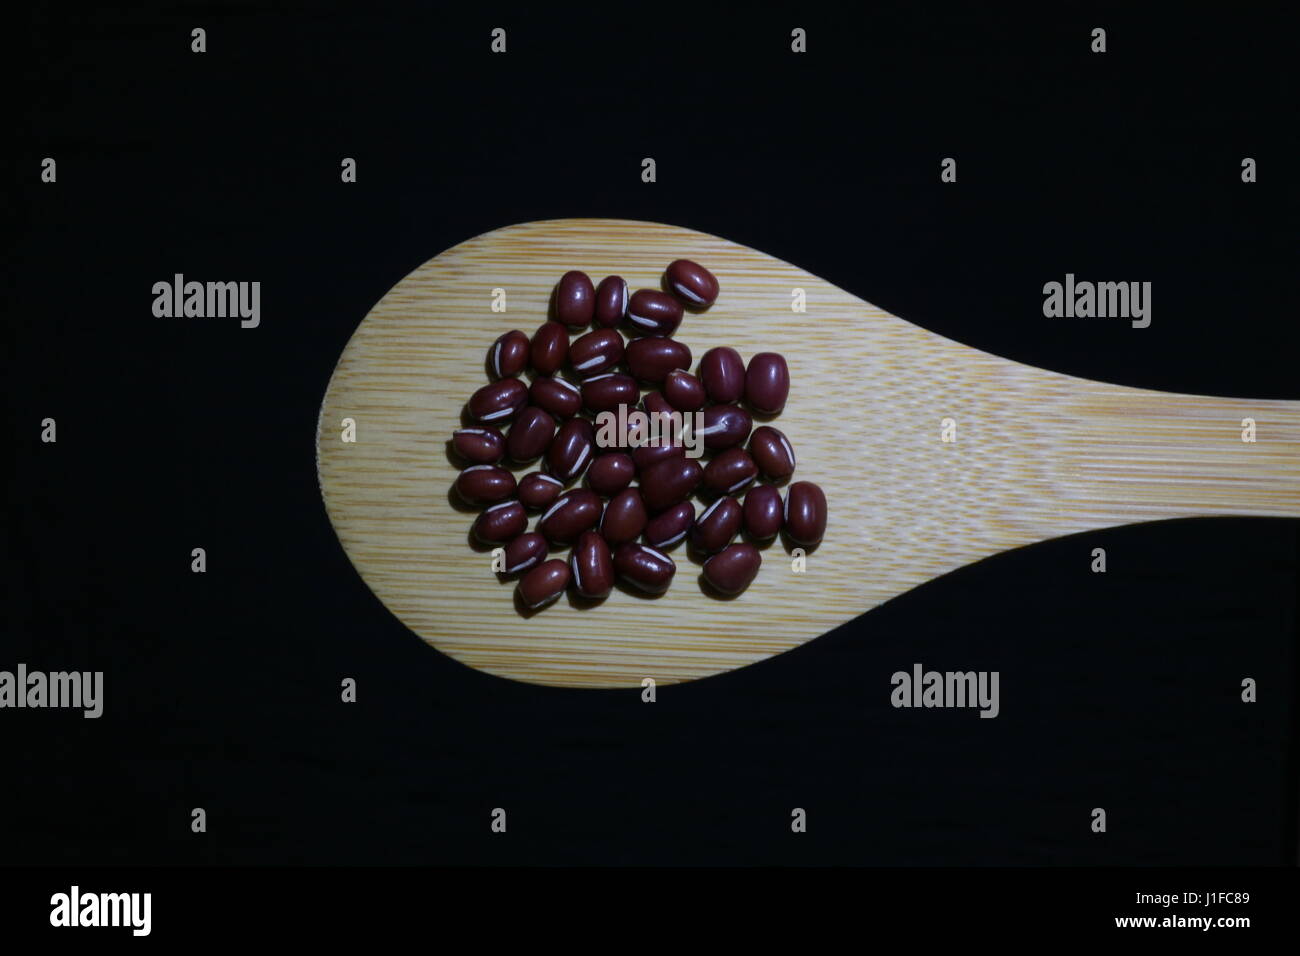 adzuki beans on wooden spoon Stock Photo